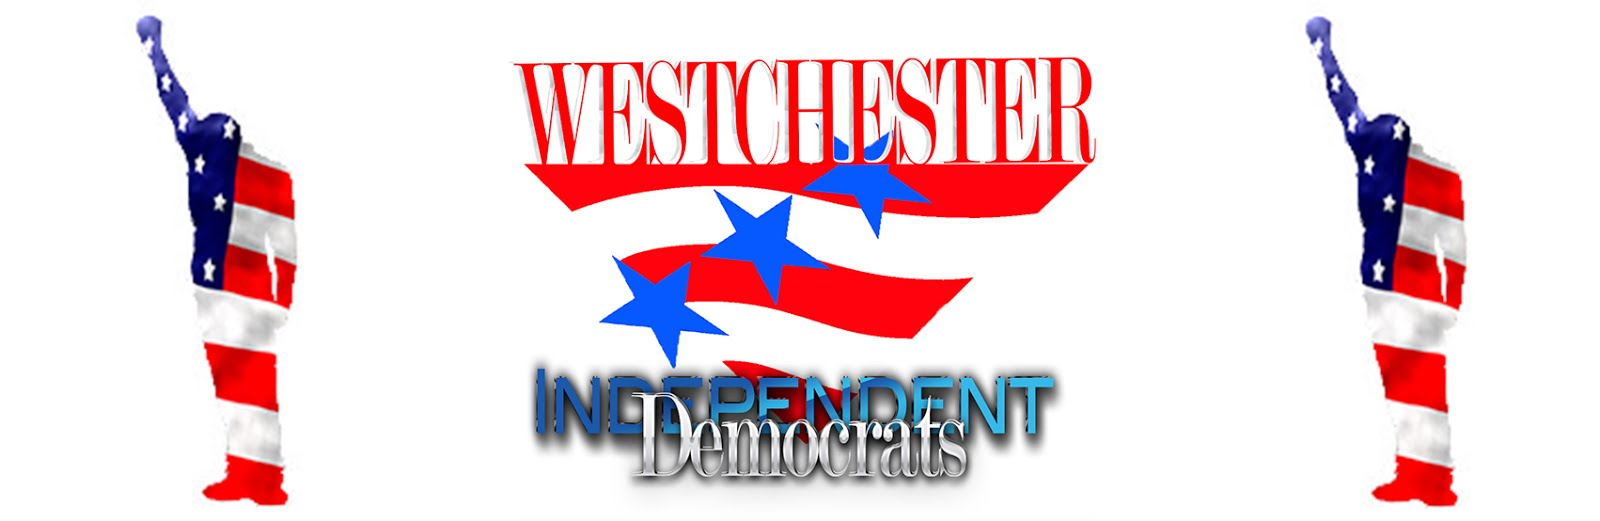 Westchester Independent Democrats 